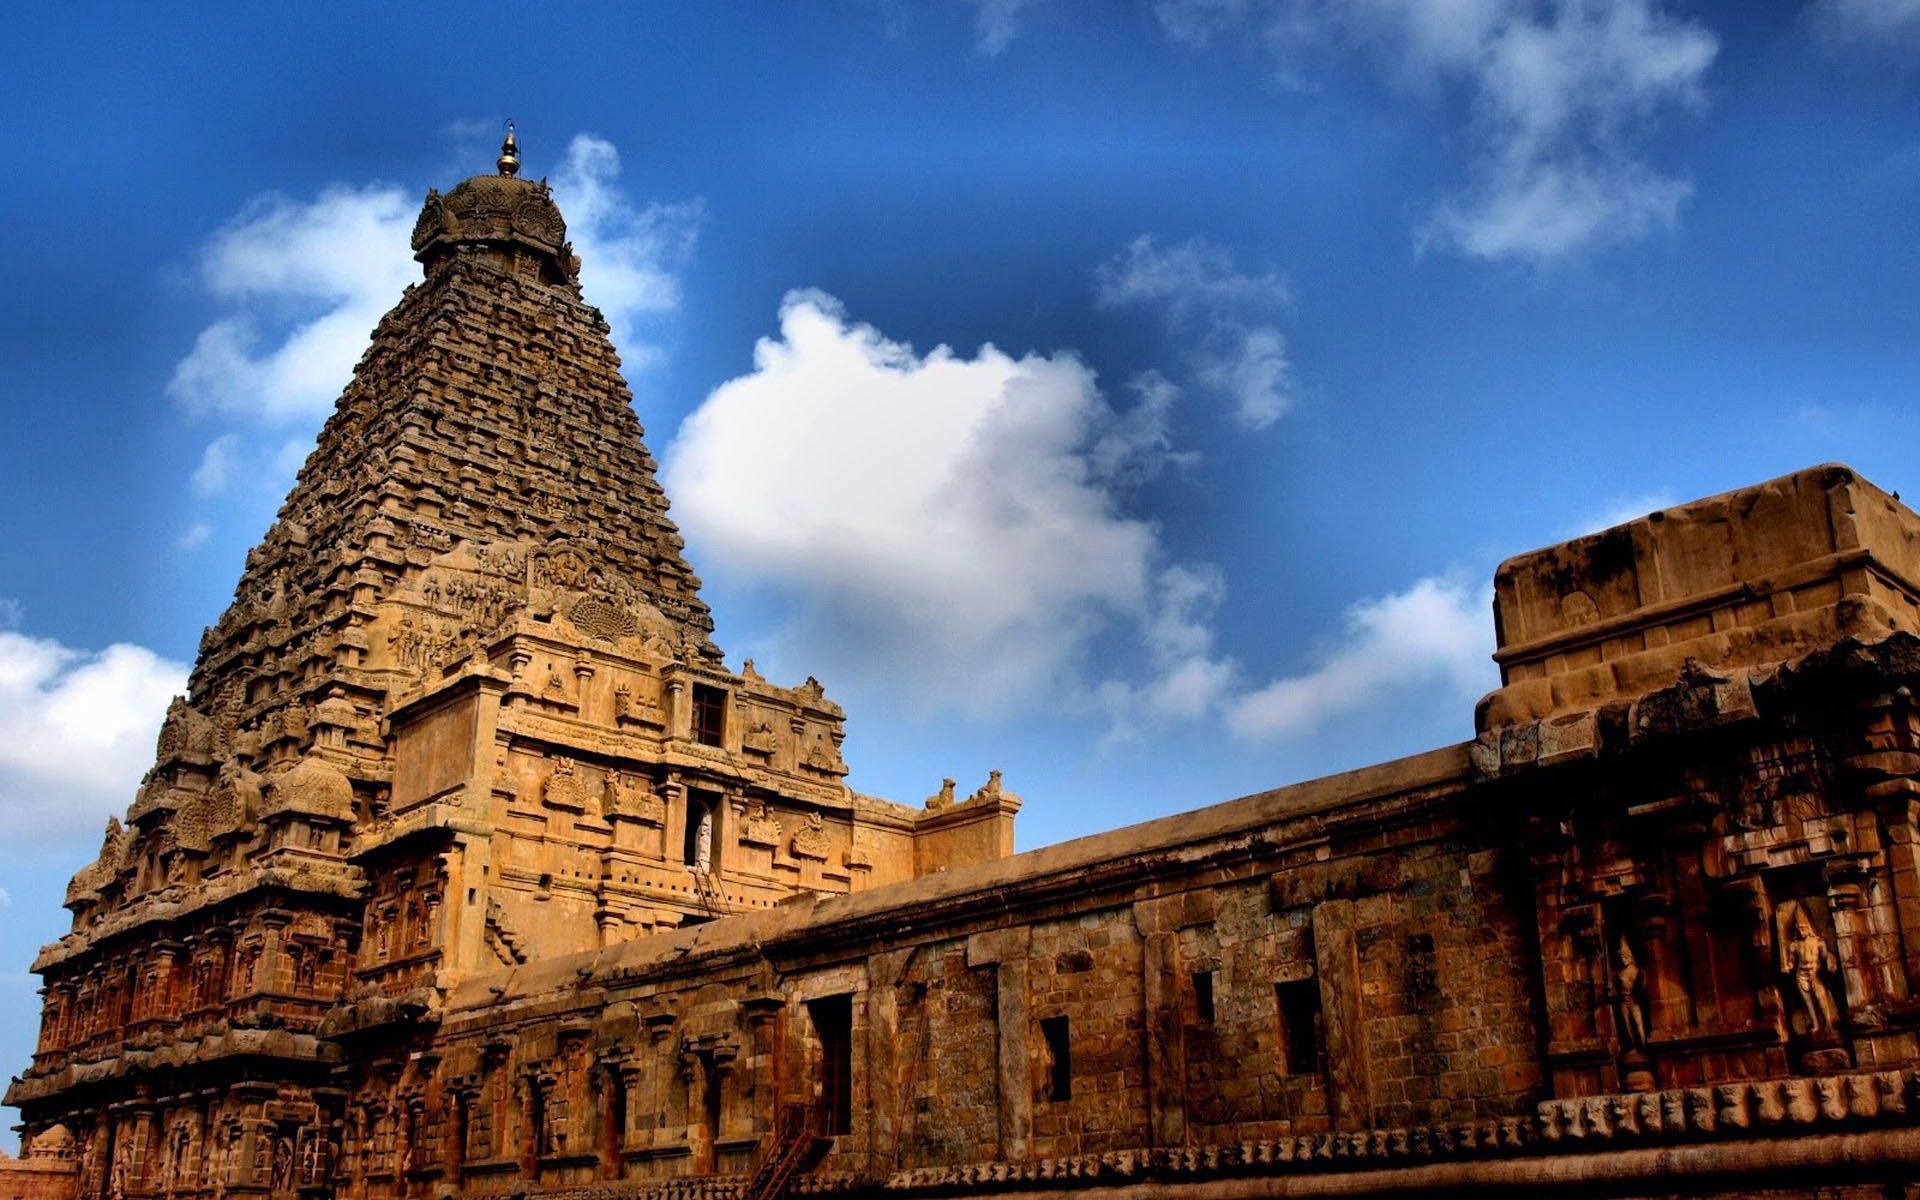 Thanjavur Brihadeeswarar Temple